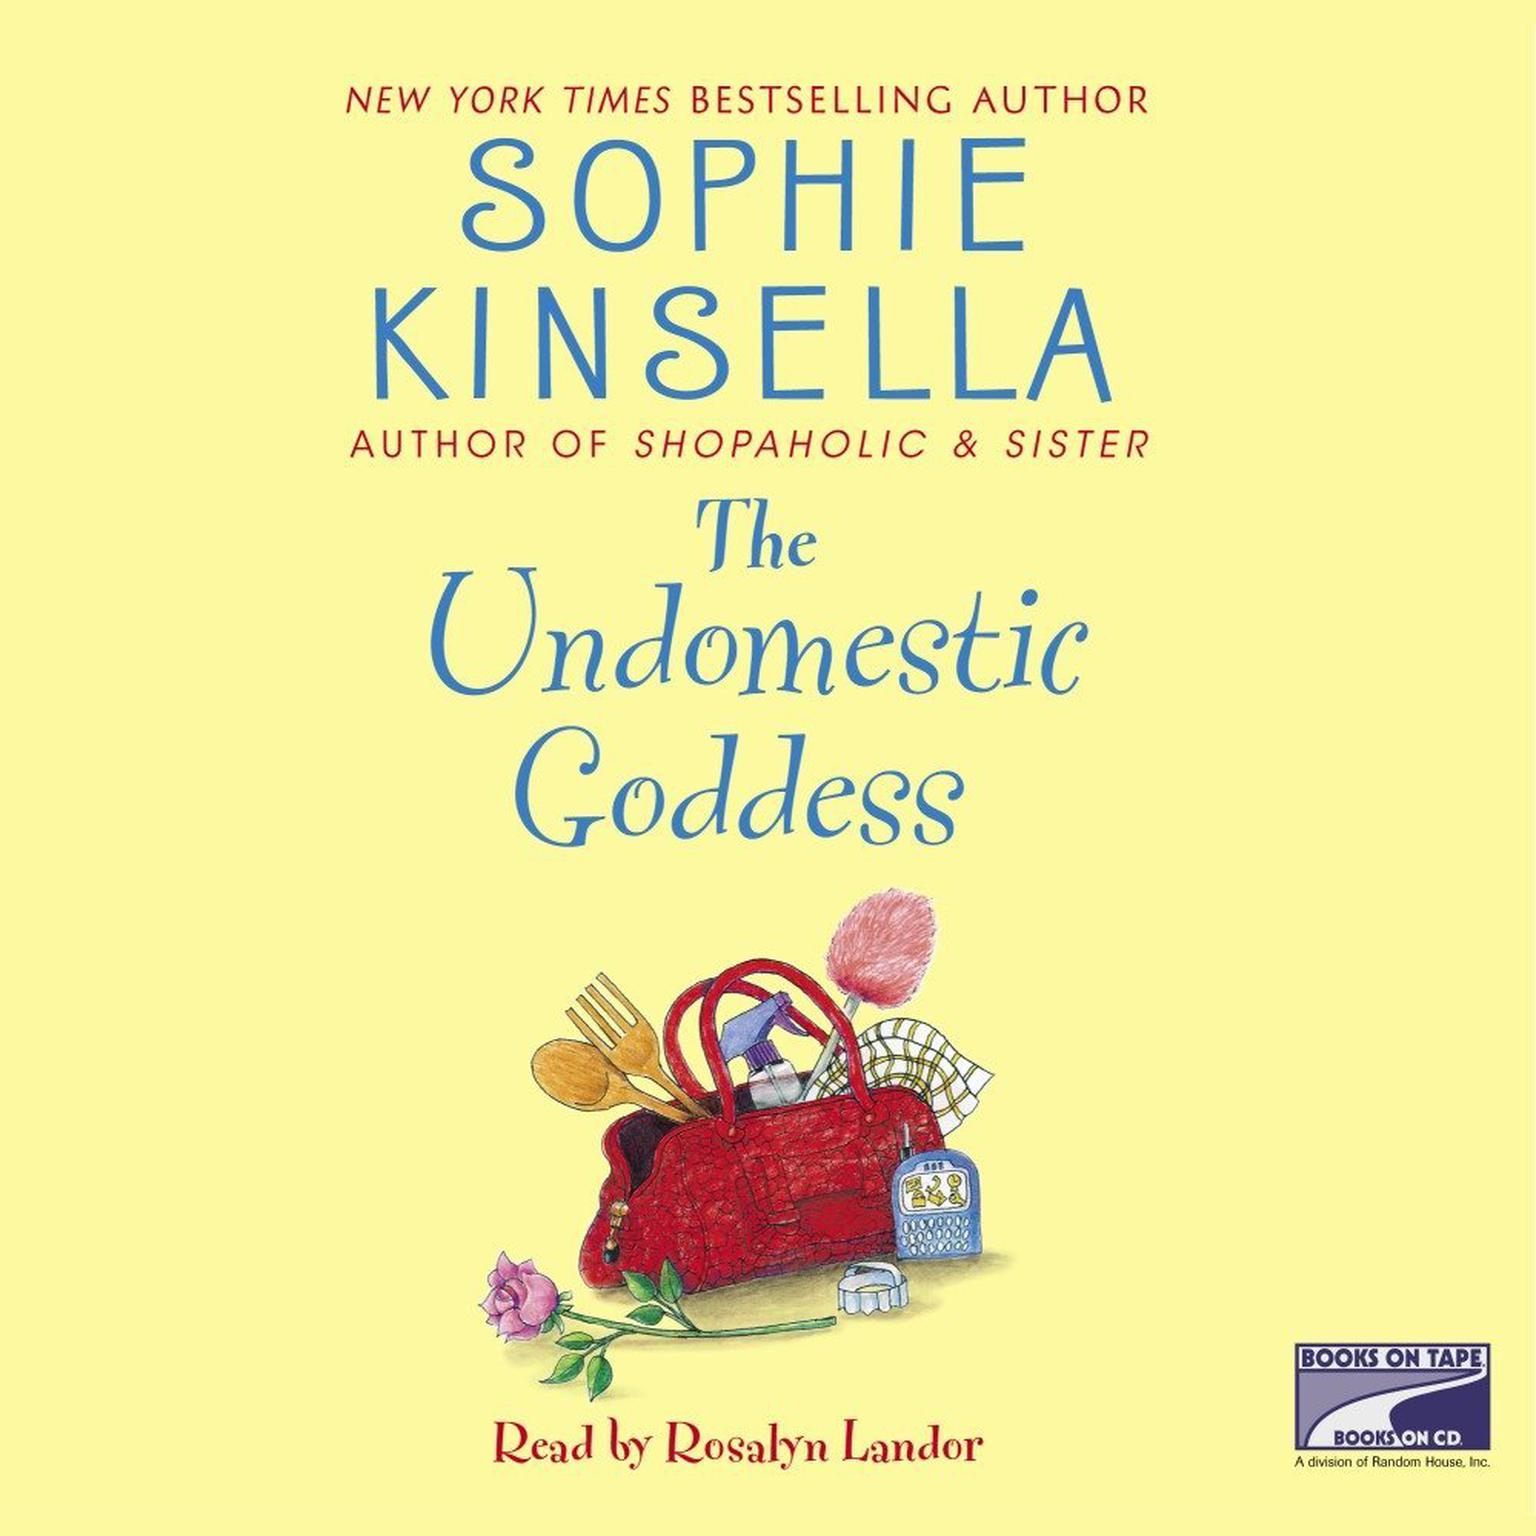 The Undomestic Goddess Audiobook, by Sophie Kinsella